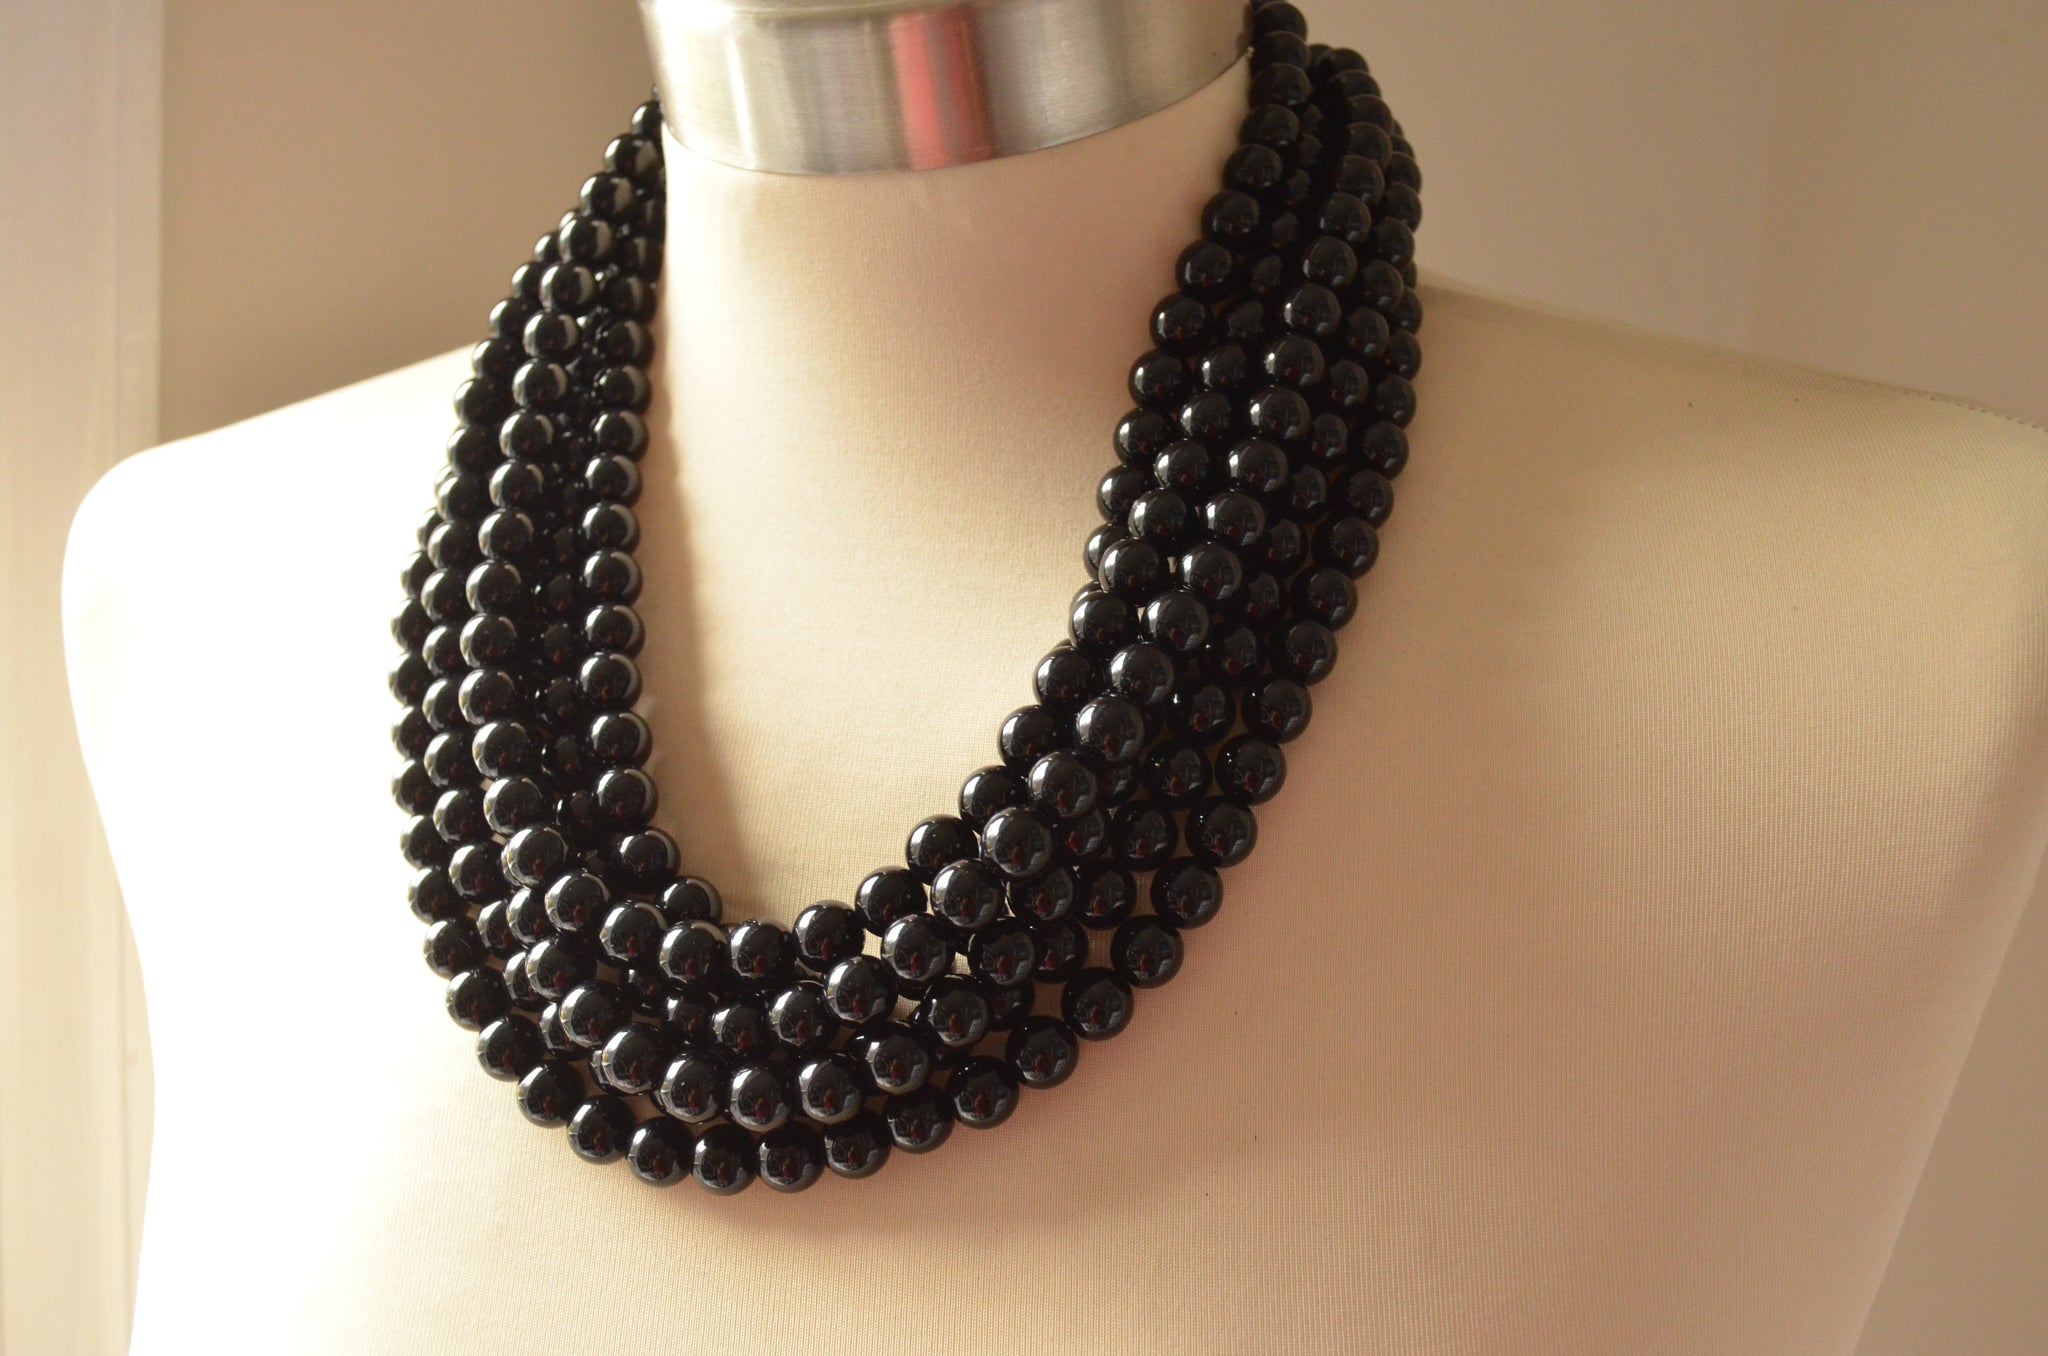 Black Tourmaline Stone Necklace, 6mm Black Tourmaline Stone Bead Necklace,  Short Necklace / Choker, Black Stone Necklace Single Strand